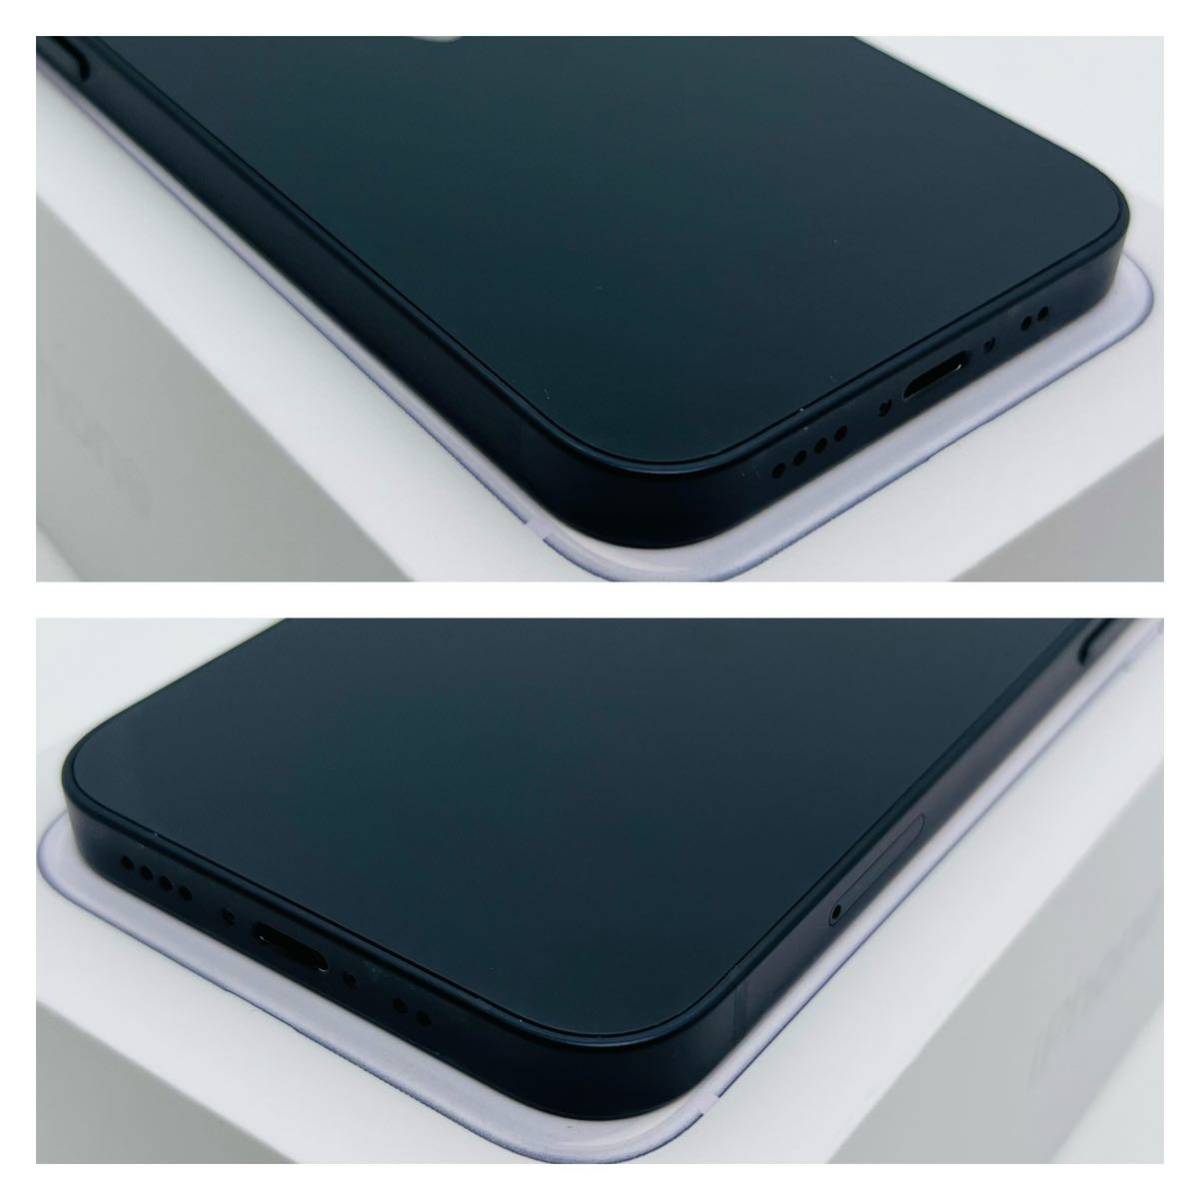 B 新品電池 iPhone 12 mini ブラック 64 GB SIMフリー-